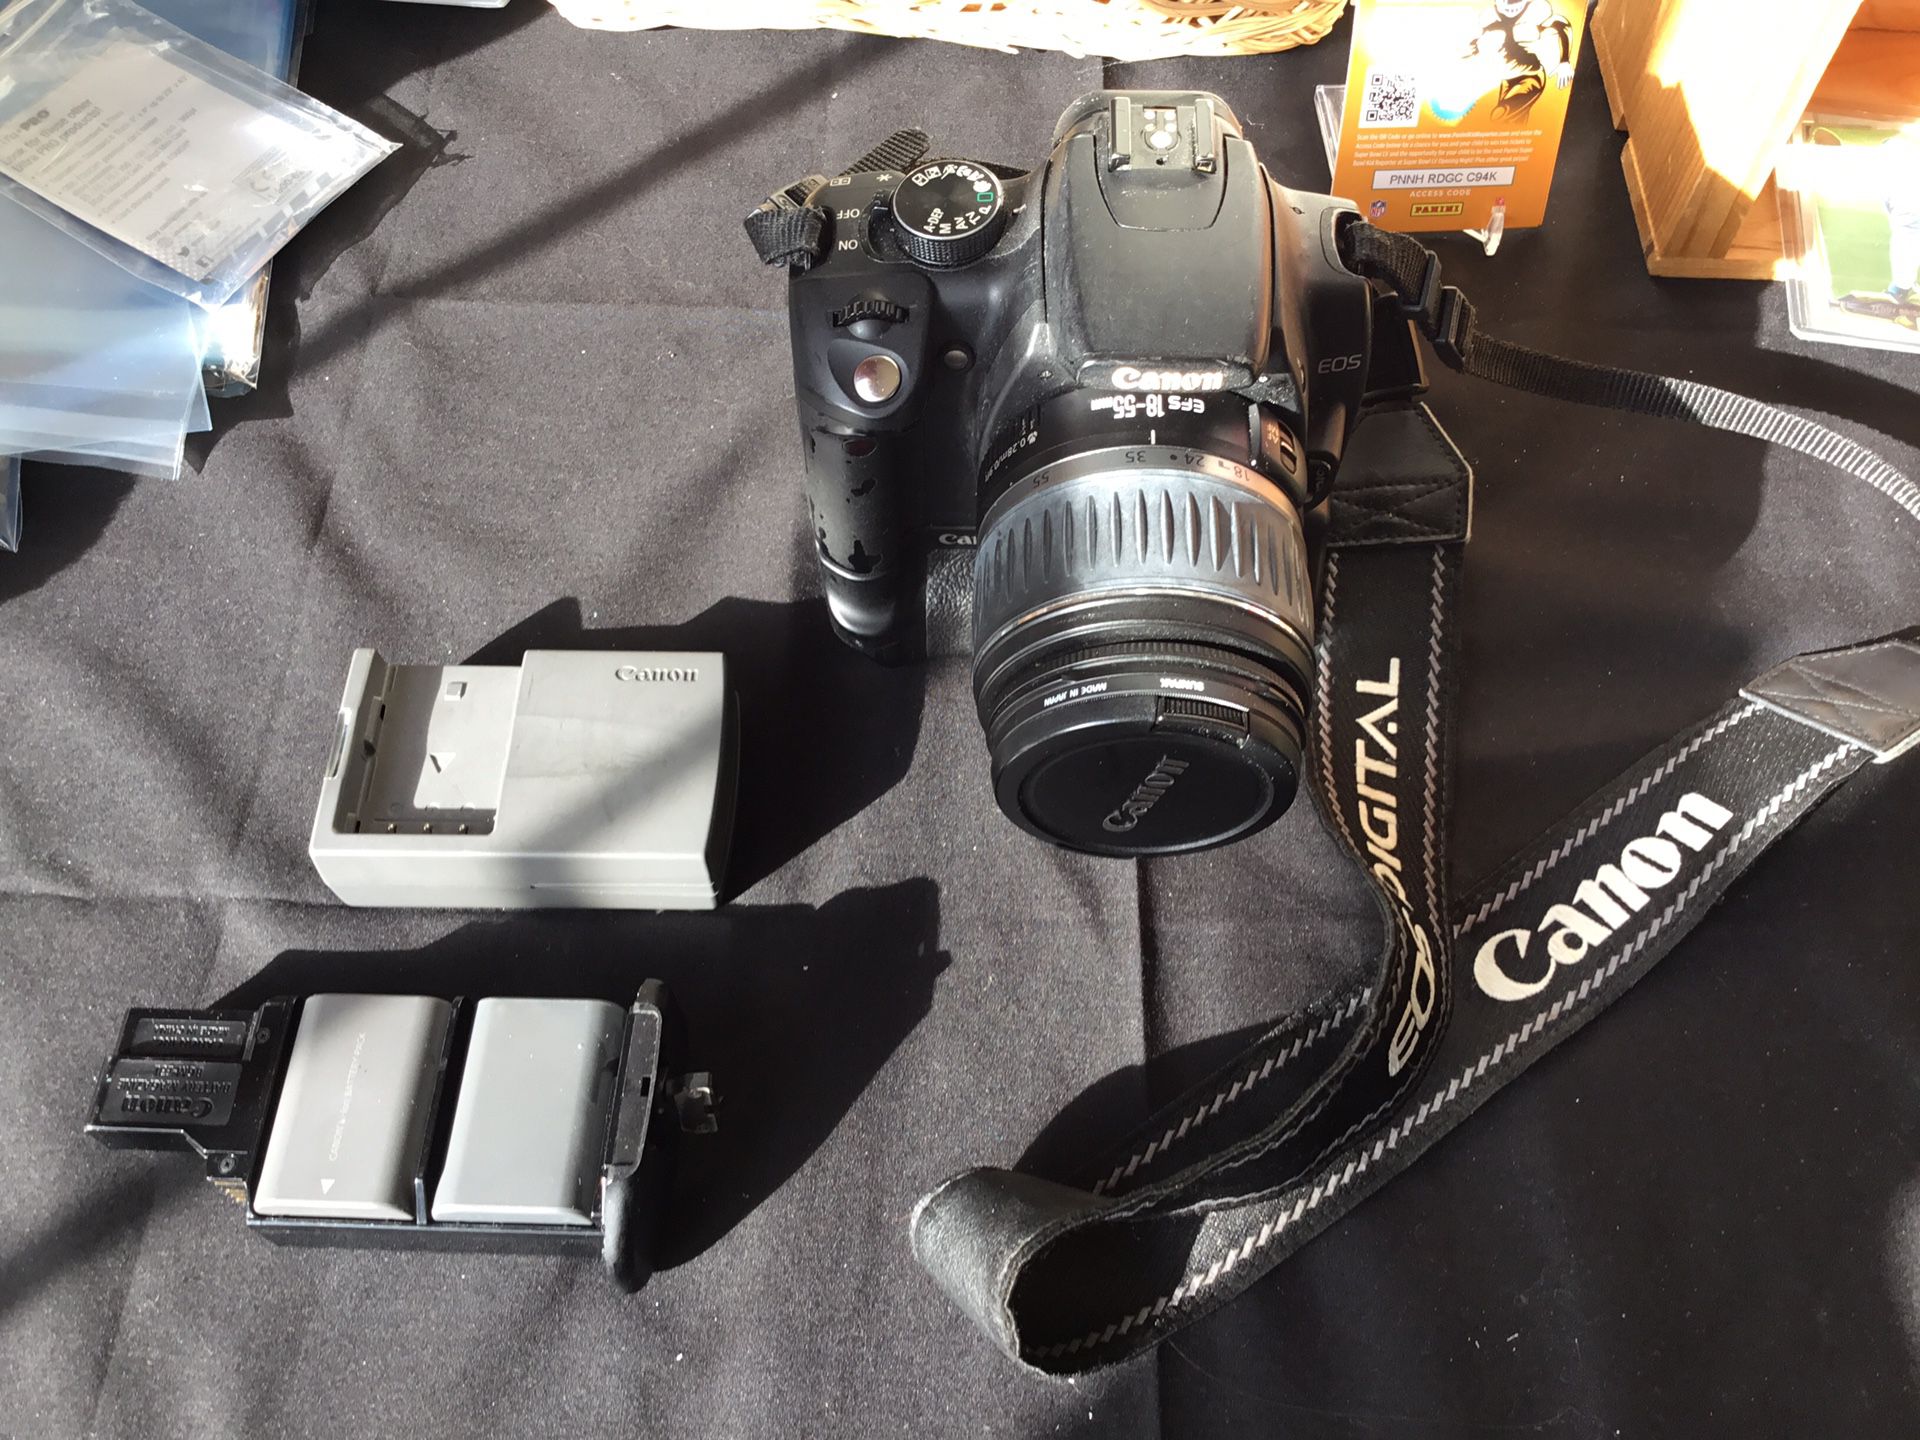 Canon Digital Camera SLR